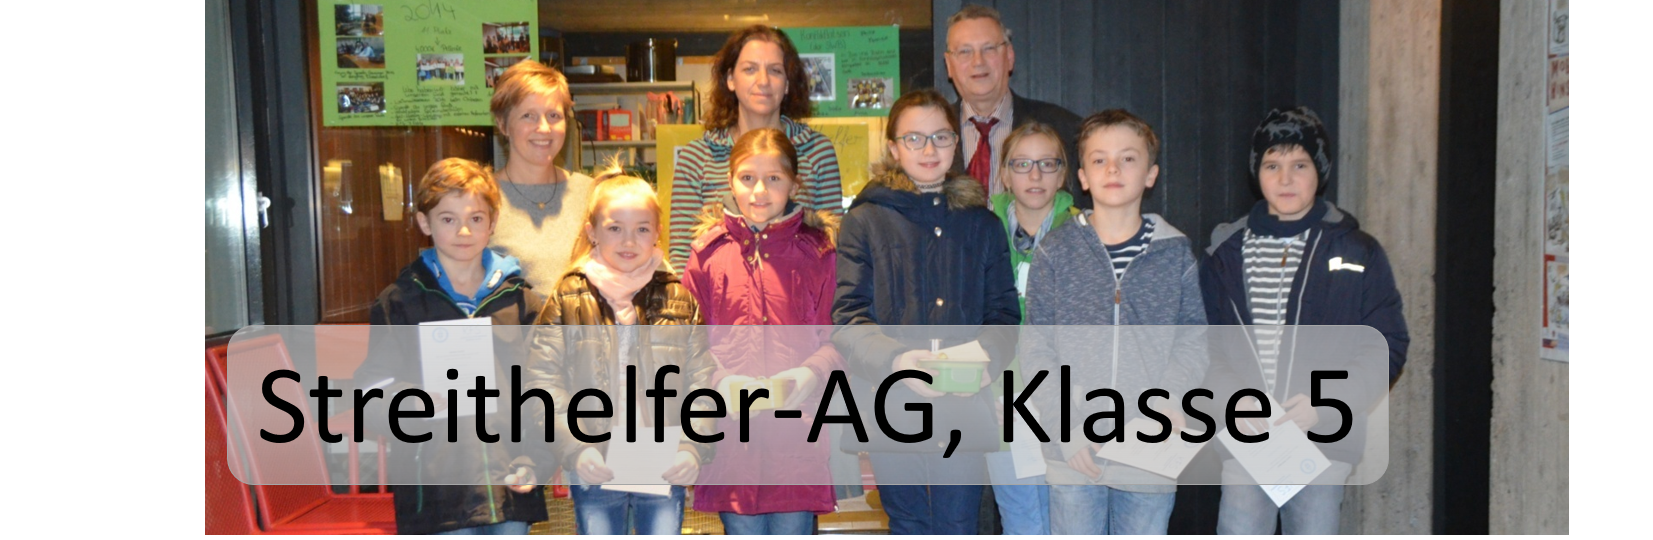 KFS_Link_Ausbildung5 (c) KFG